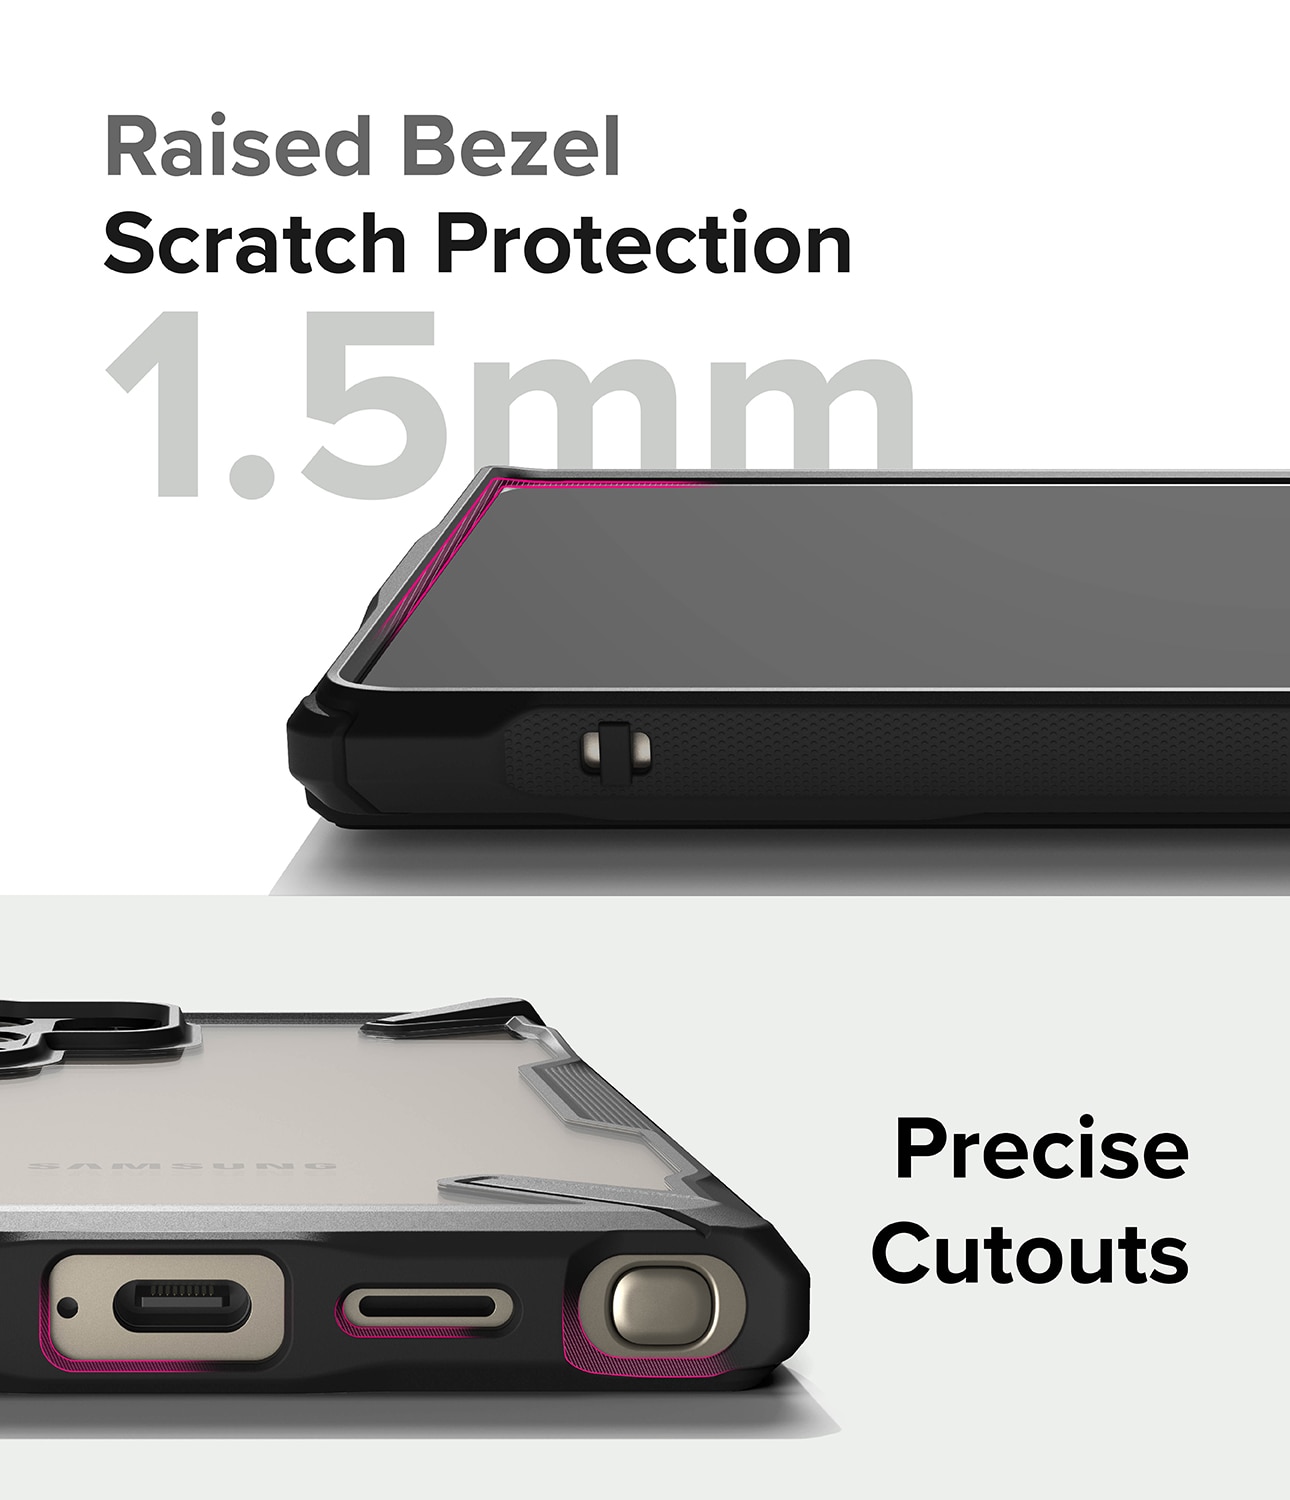 Samsung Galaxy S24 Ultra Fusion X Skal, svart/genomskinlig